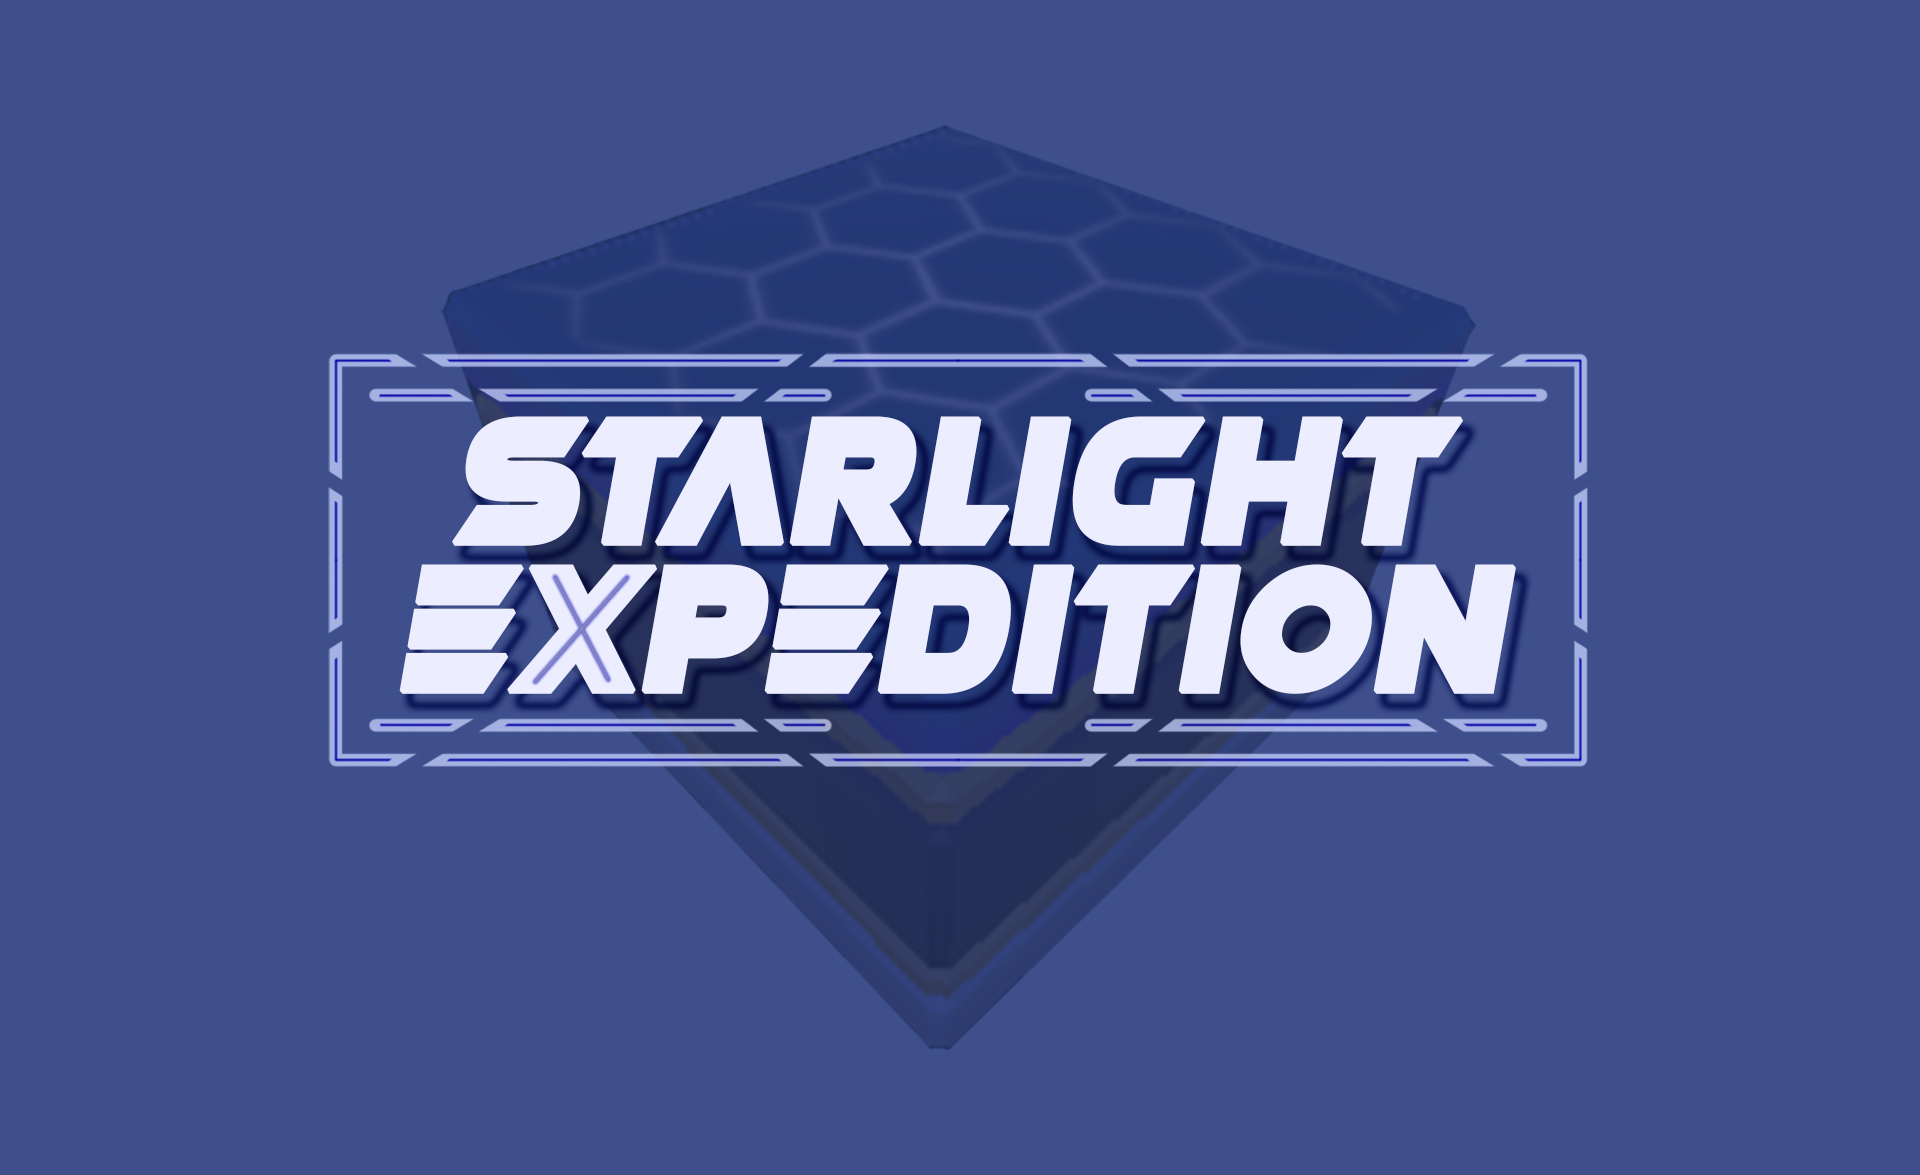 Starlight Expedition